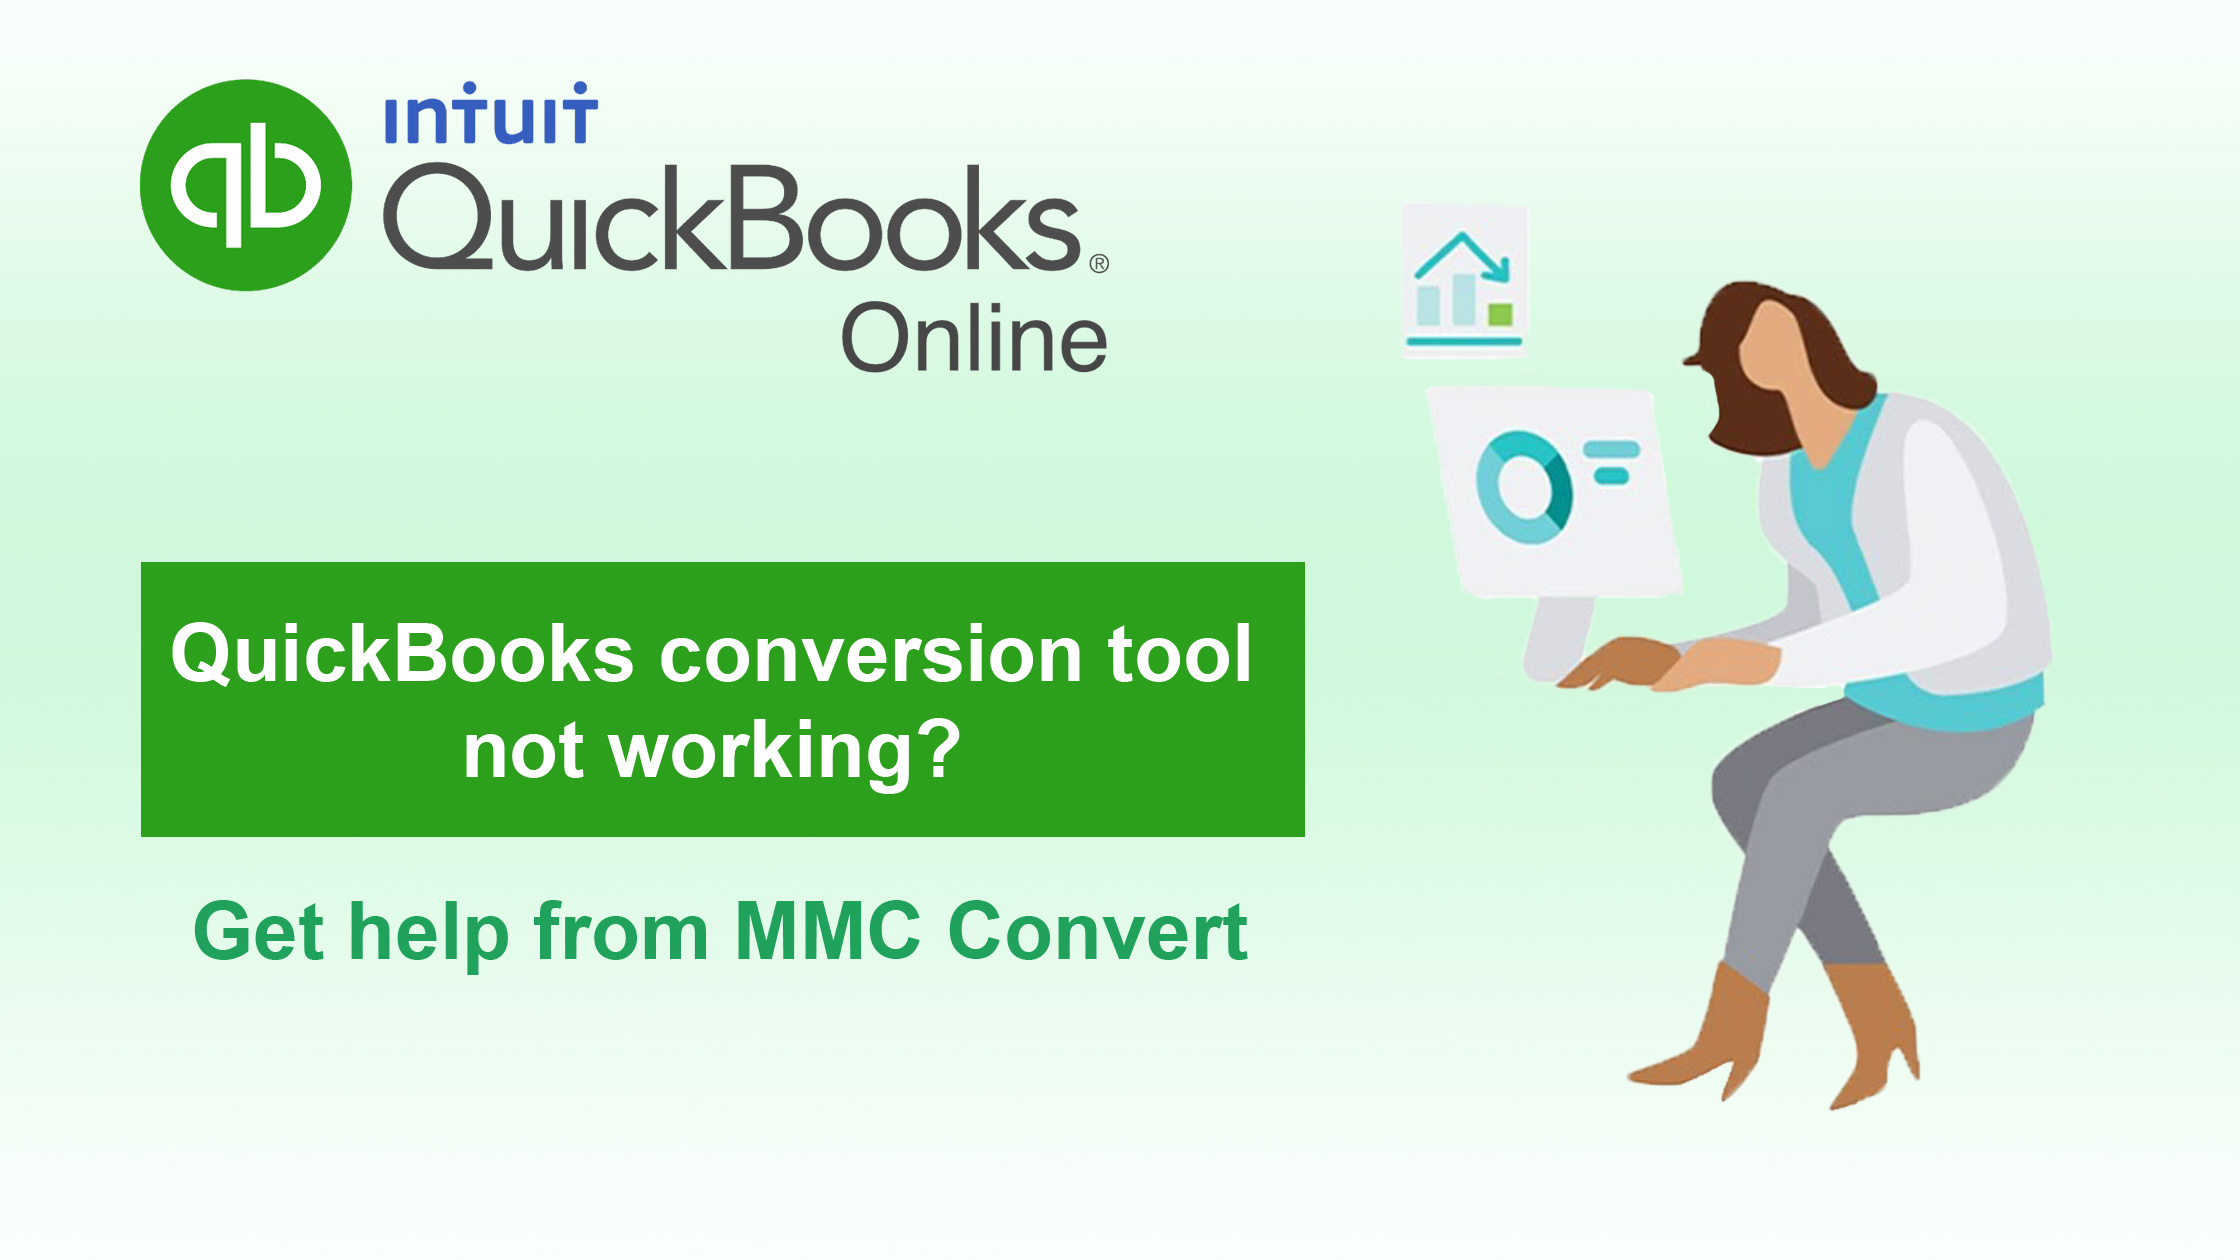 QuickBooks conversion tool not working? – Get help from MMC Convert